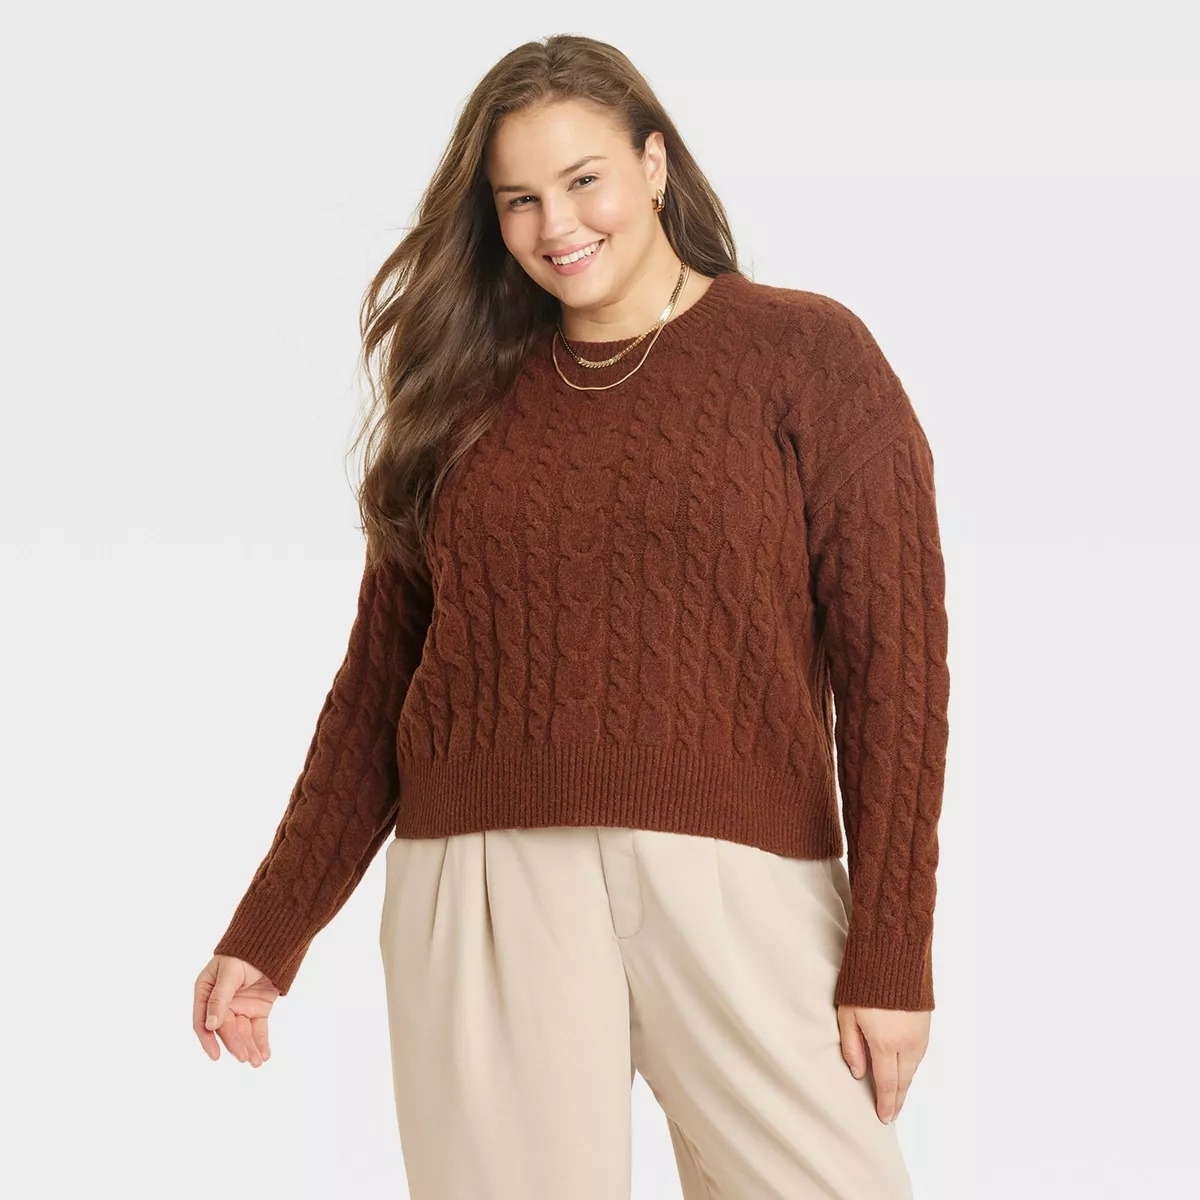 Crewneck pullover sweater